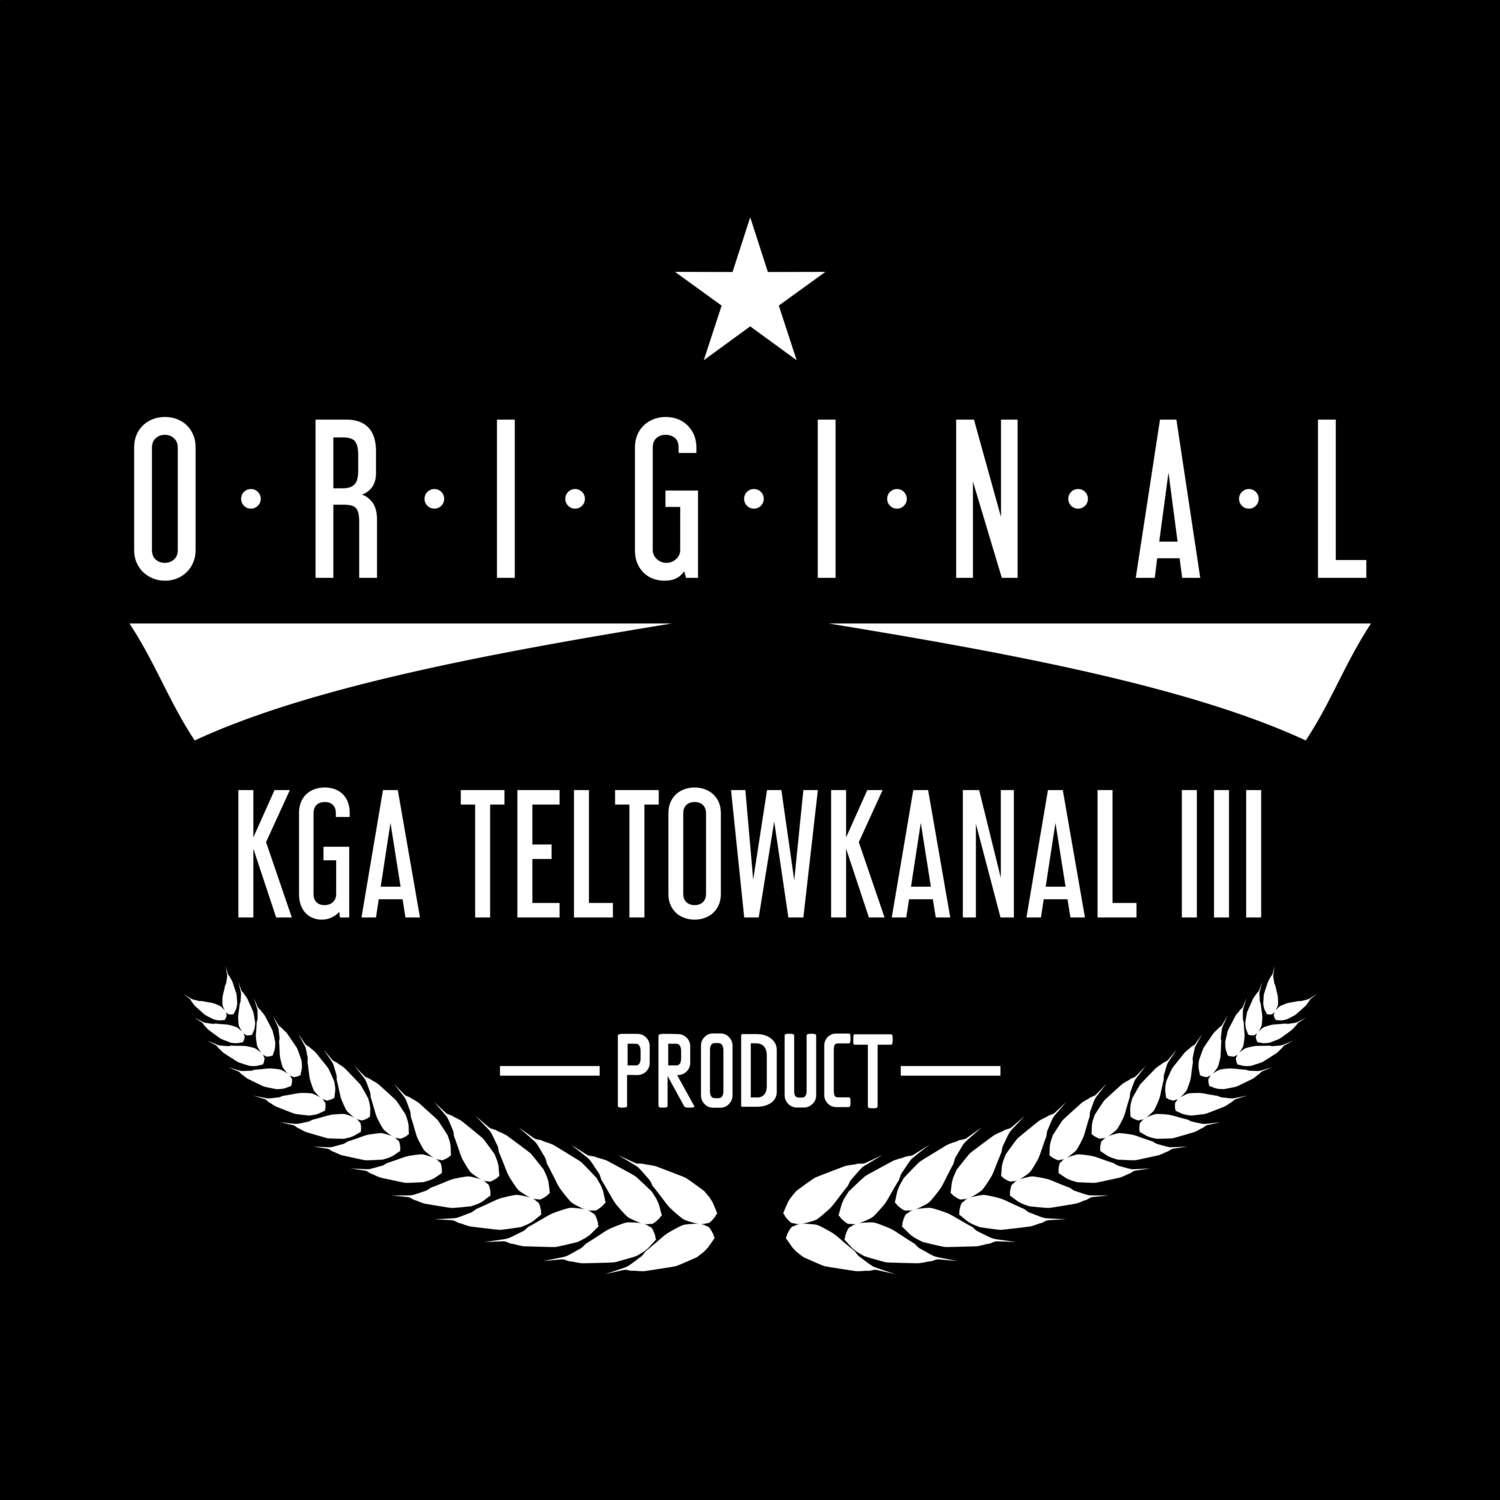 KGA Teltowkanal III T-Shirt »Original Product«